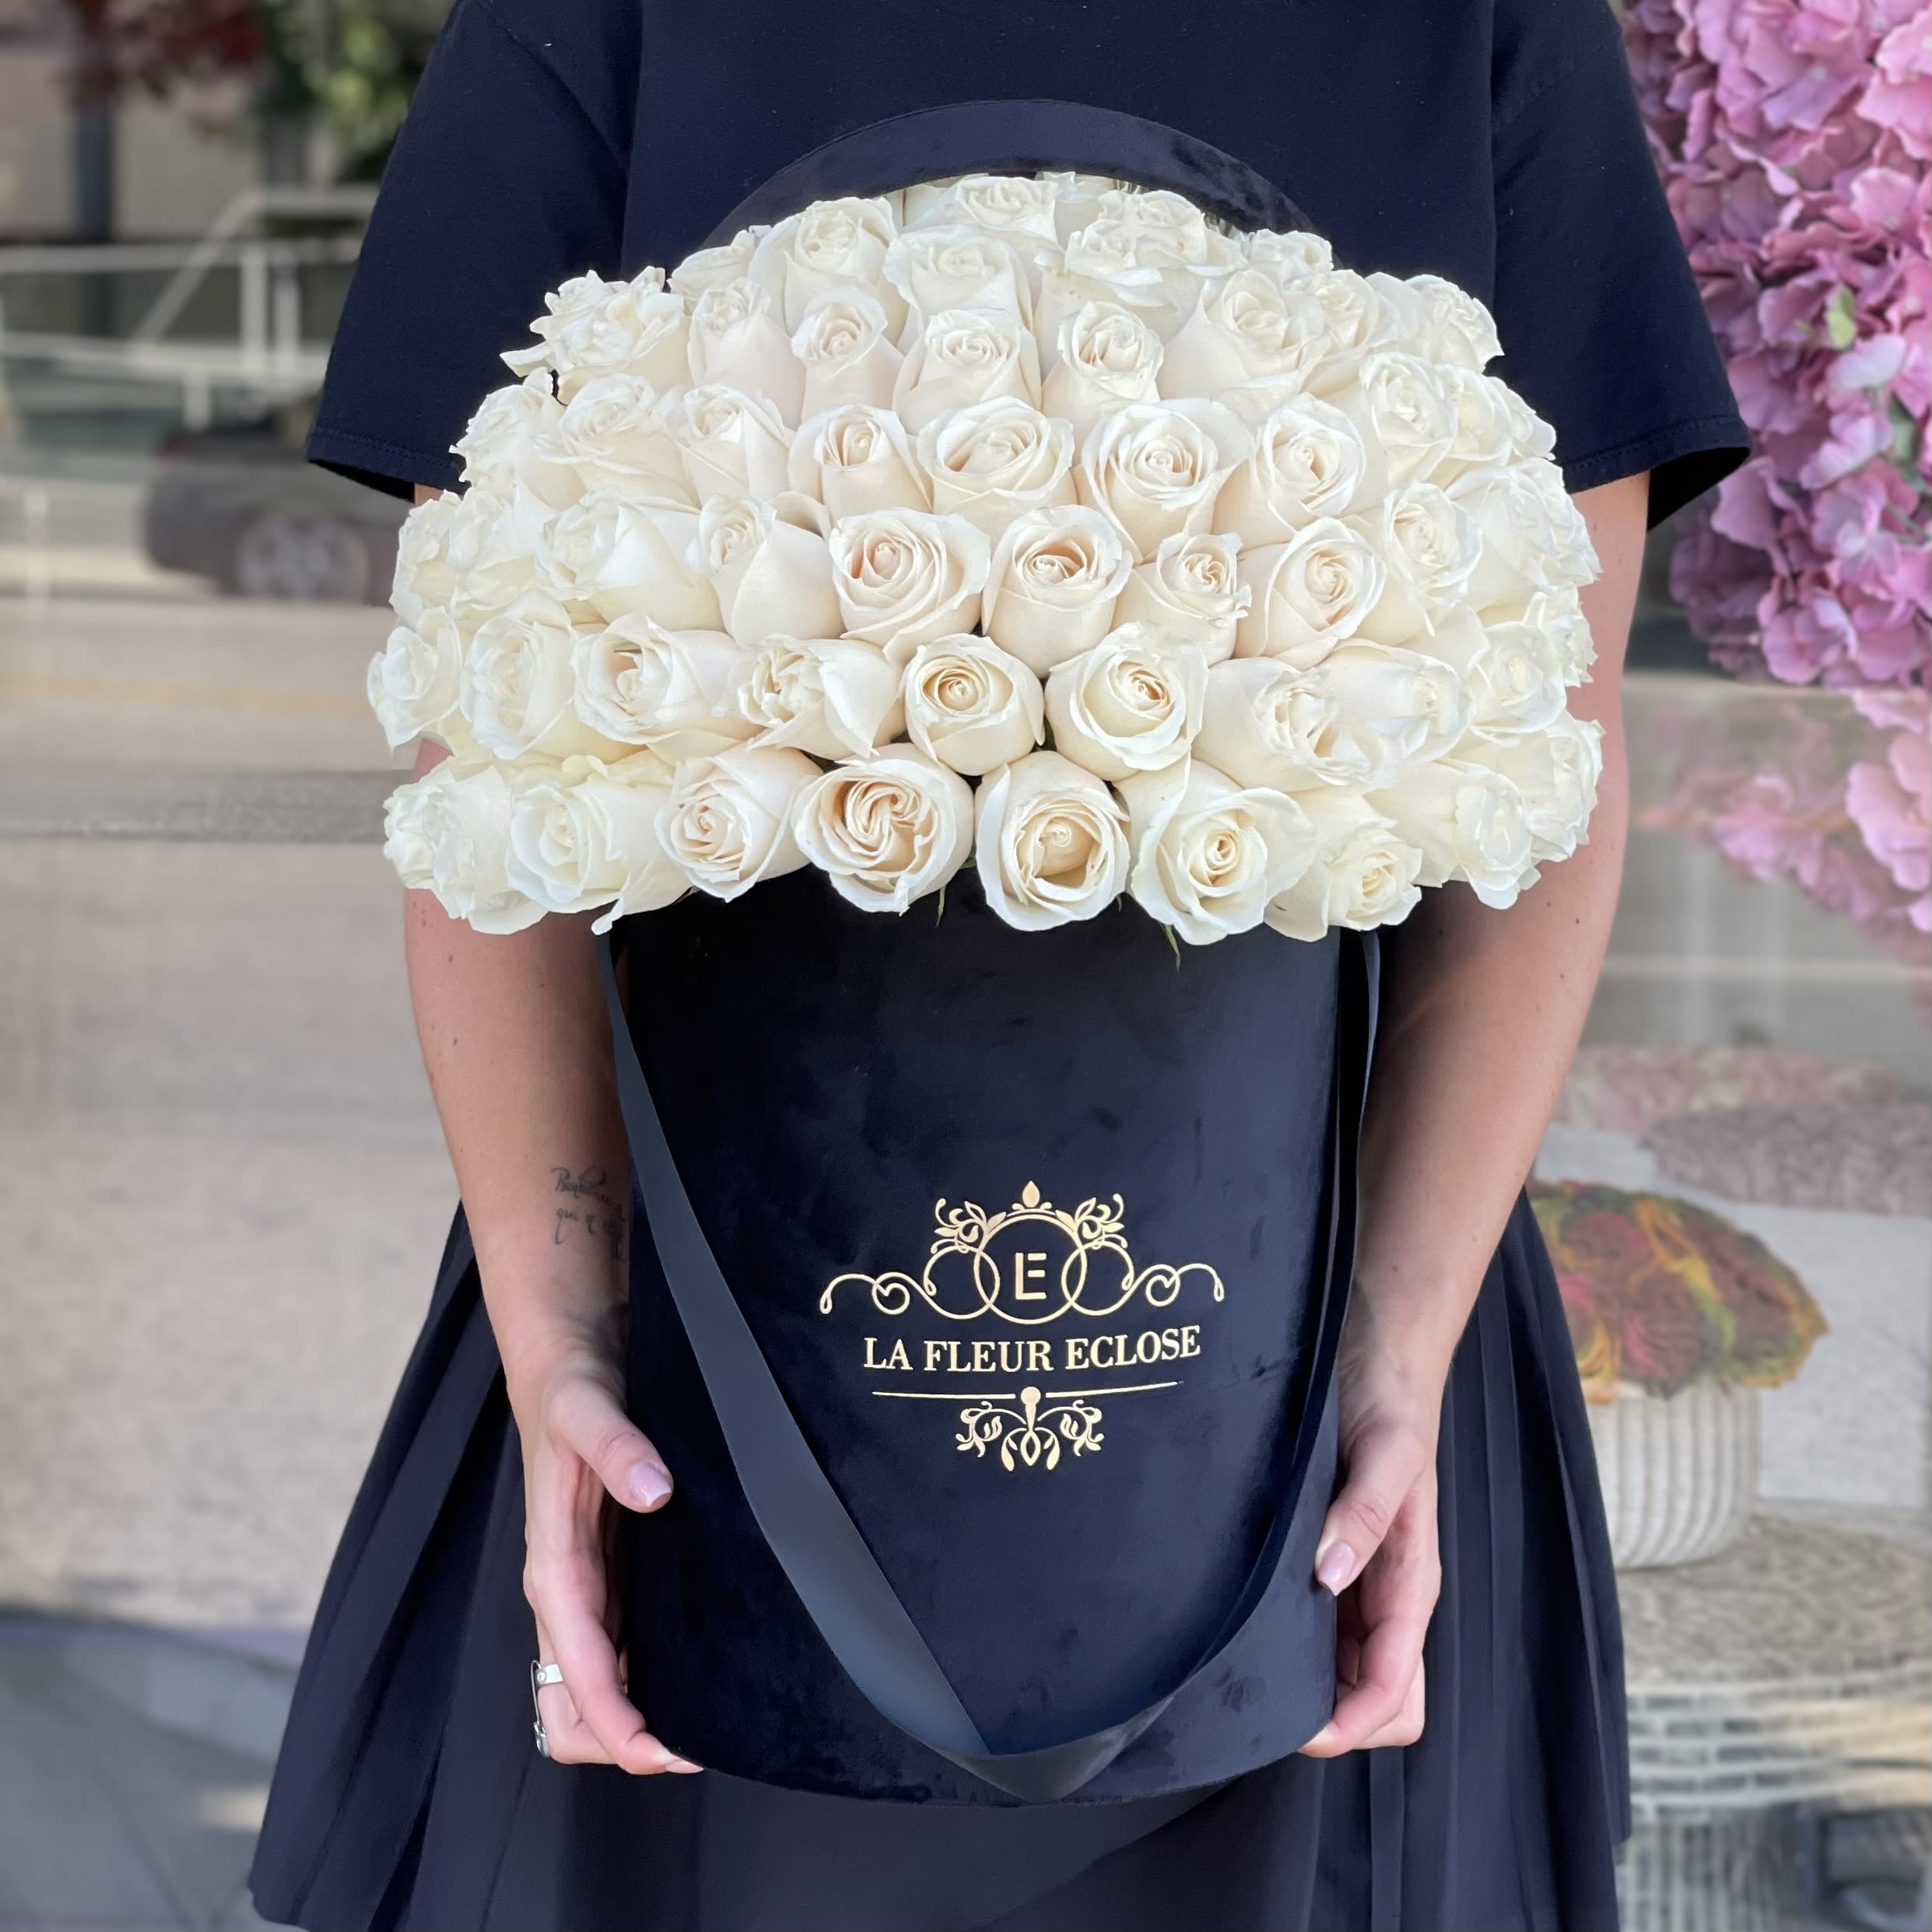 Black Velvet Box With 50 White Roses In Encino Ca La Fleur Eclose